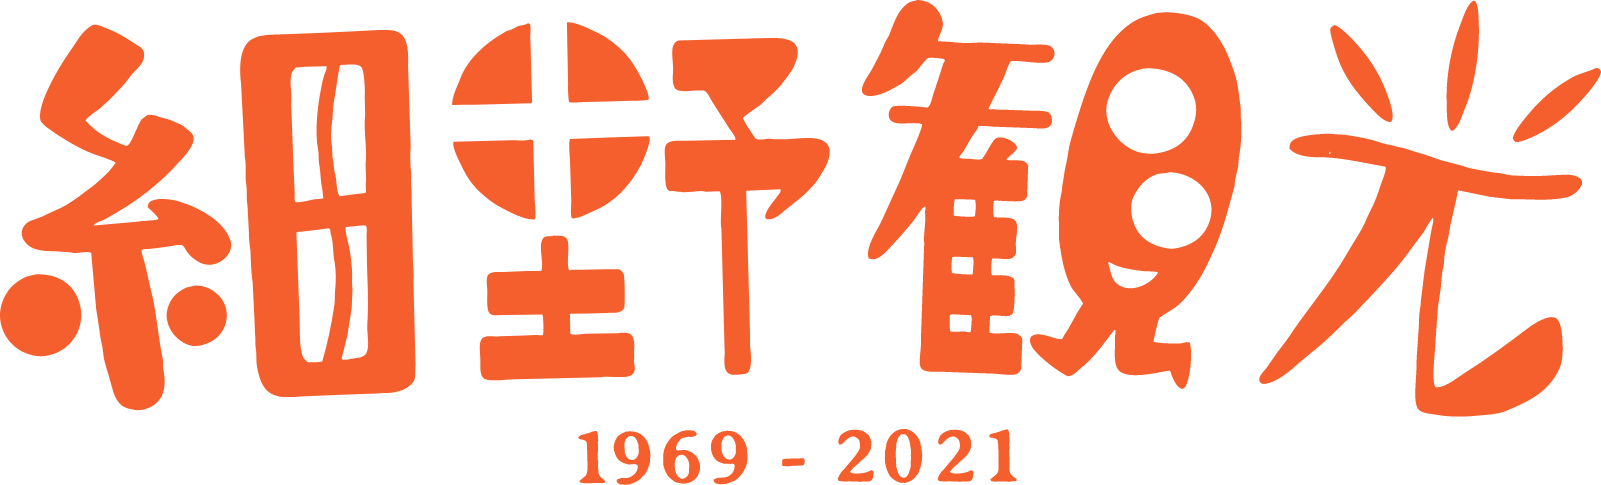 細野観光 1969-2021